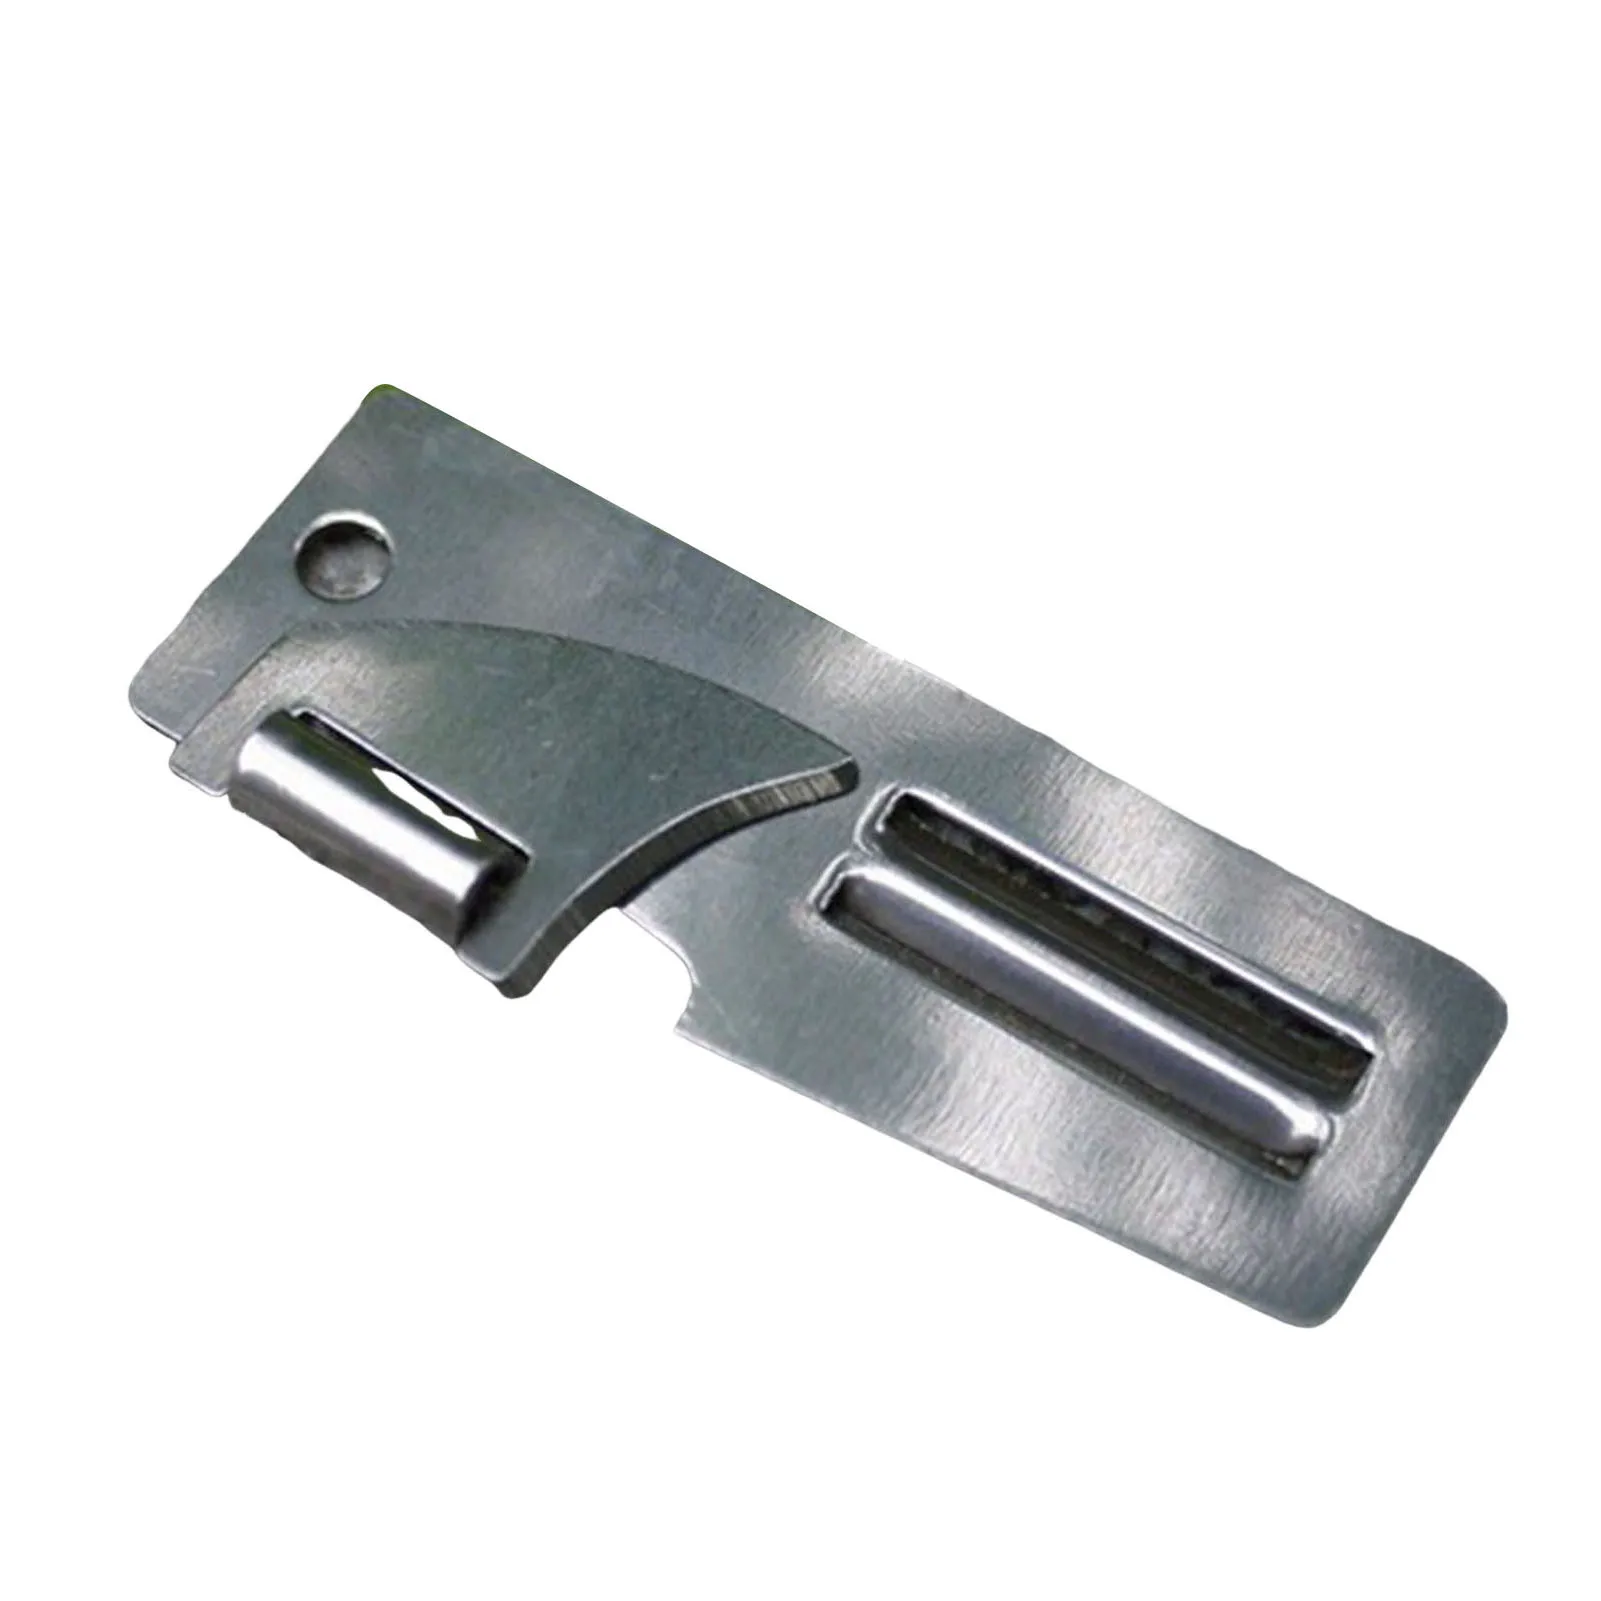 Stainless Steel Peeler Can Opener 2 In 1 Outdoor Edc Pocket Multi